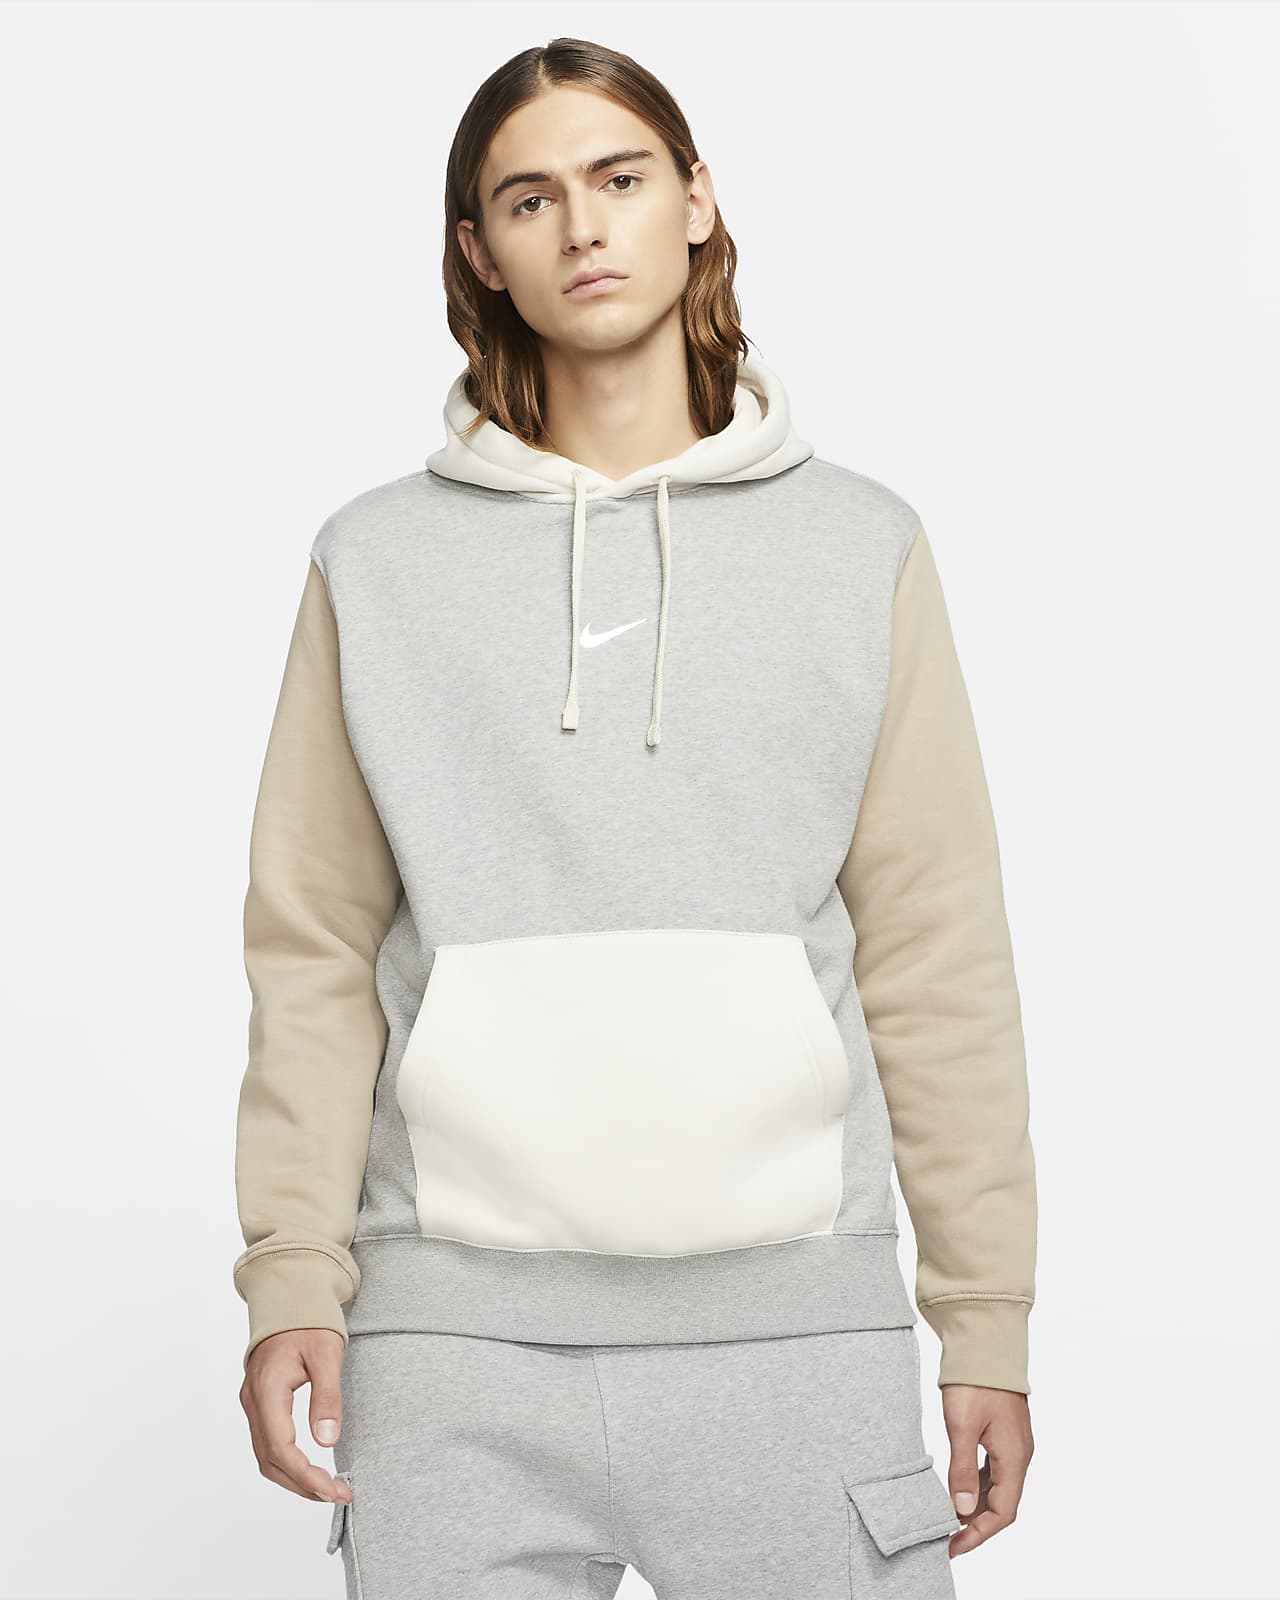 grey nike sportswear hoodie